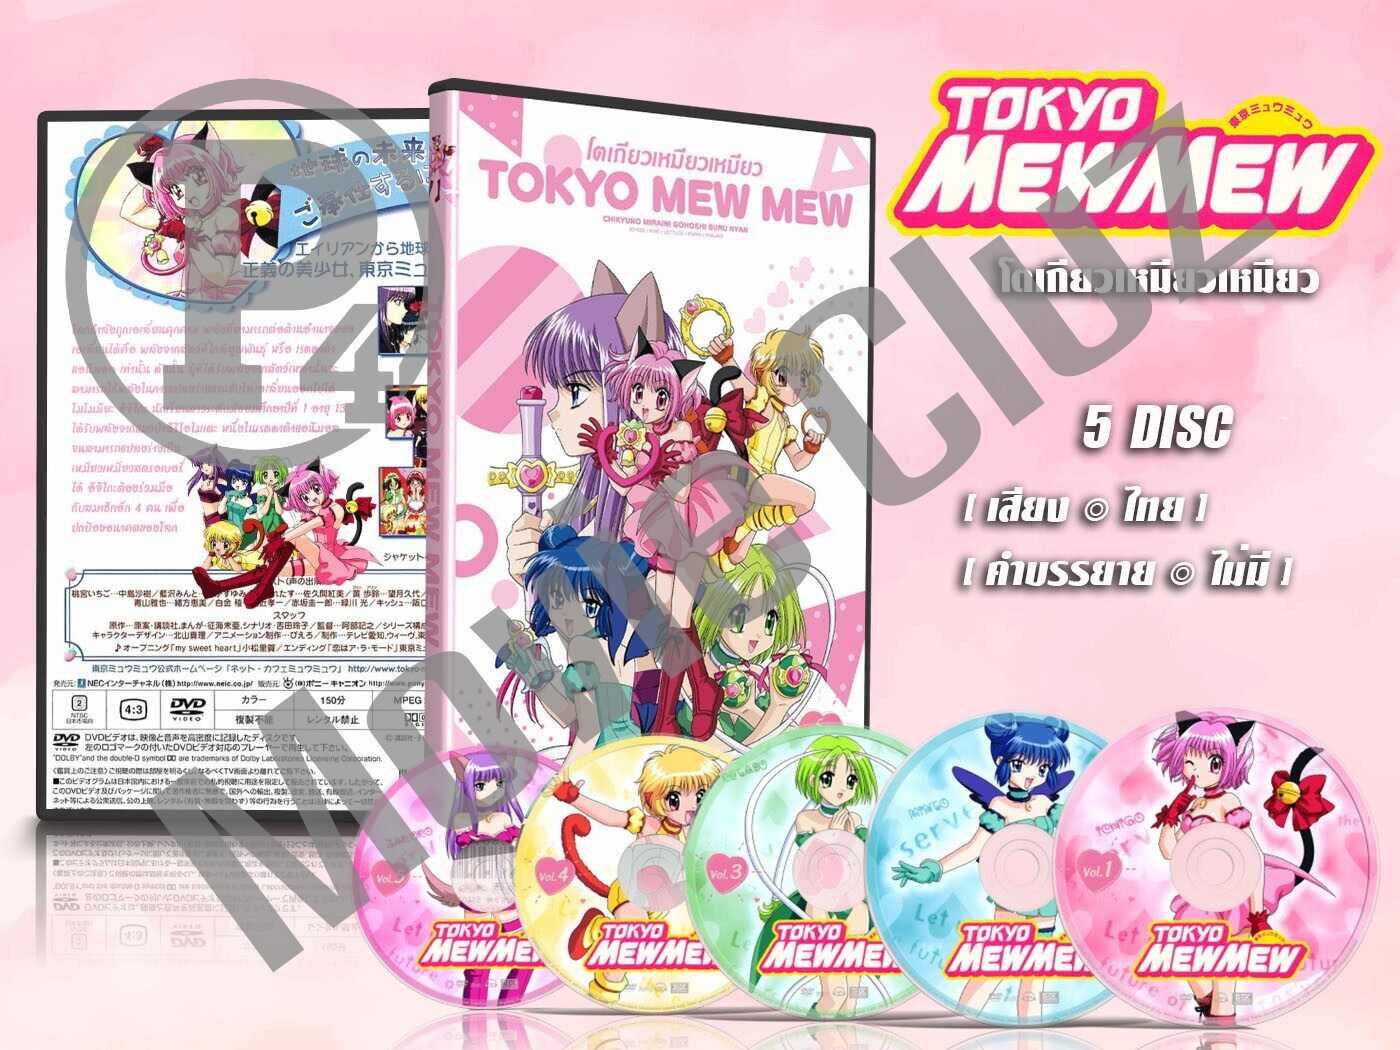 Tokyo Mew Mew New Season 2 Trailer, Poster Released